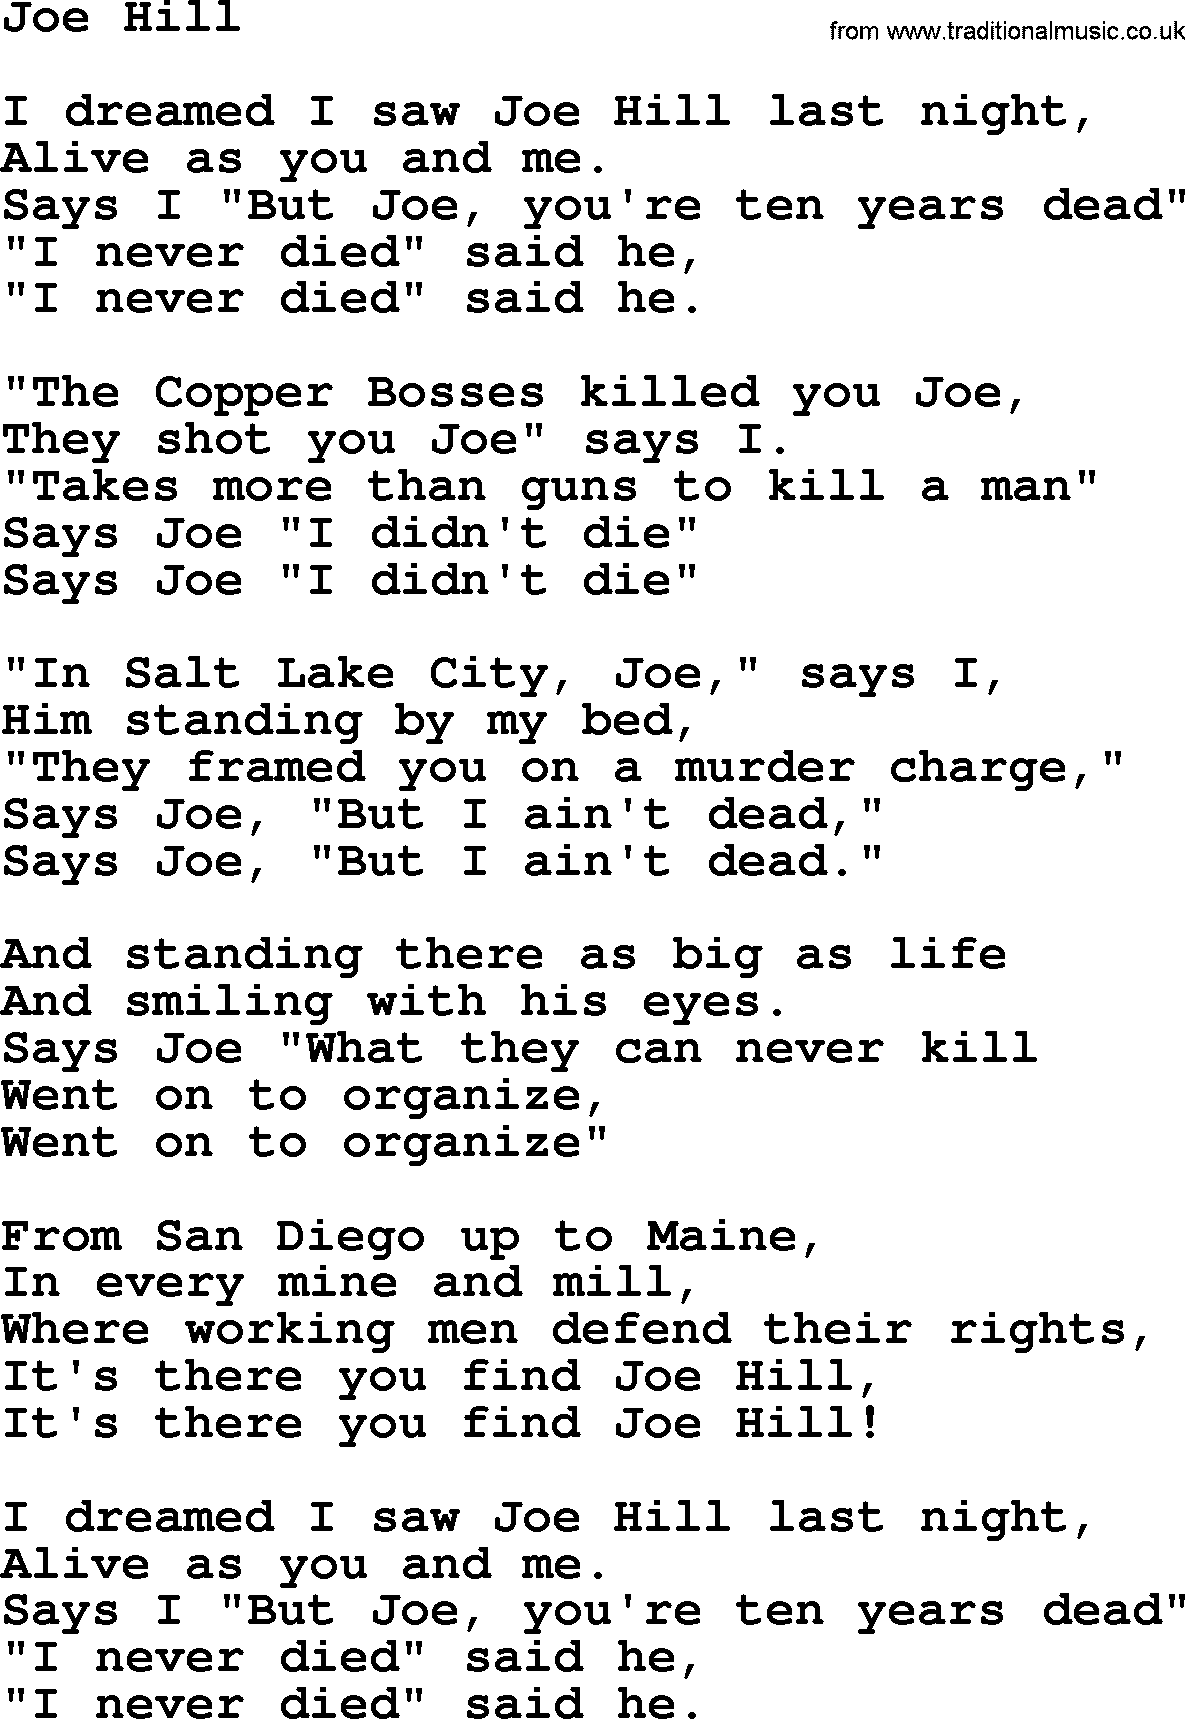 Joan Baez song Joe Hill, lyrics